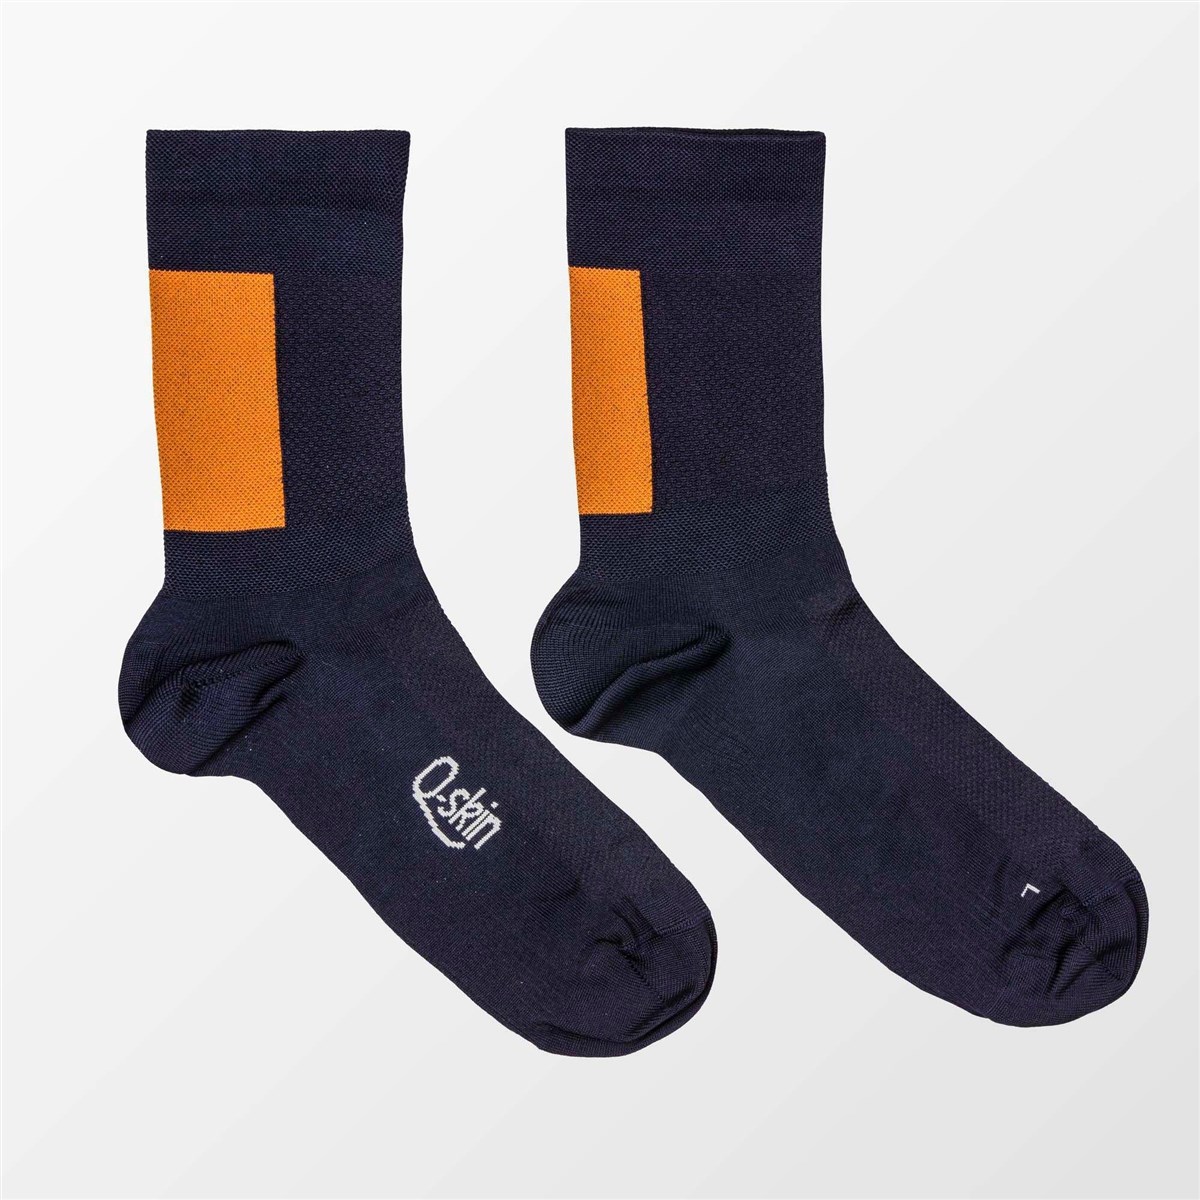 Sportful Snap Socks product image